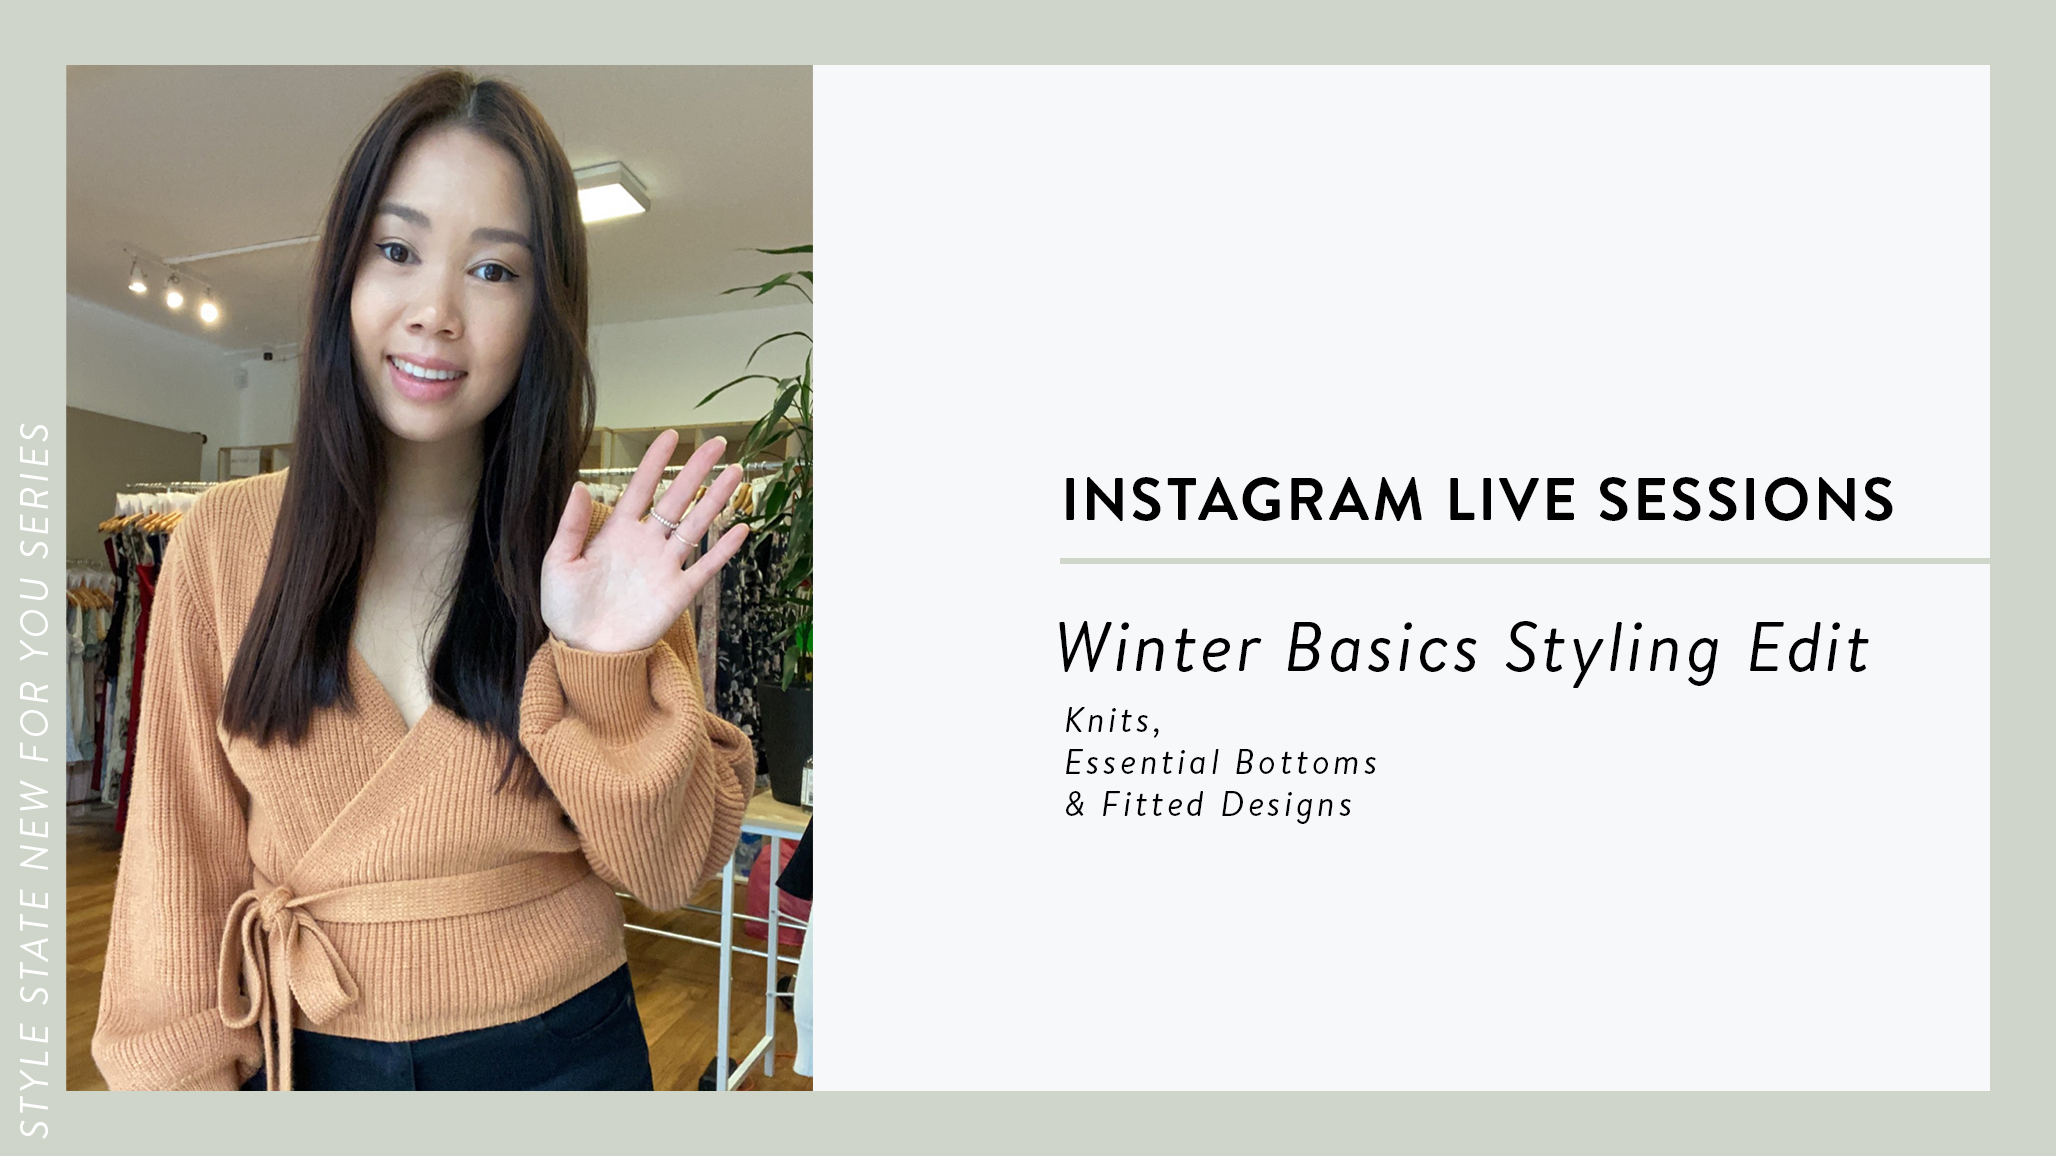 INSTAGRAM LIVE SESSION: Winter Basics Styling Edit